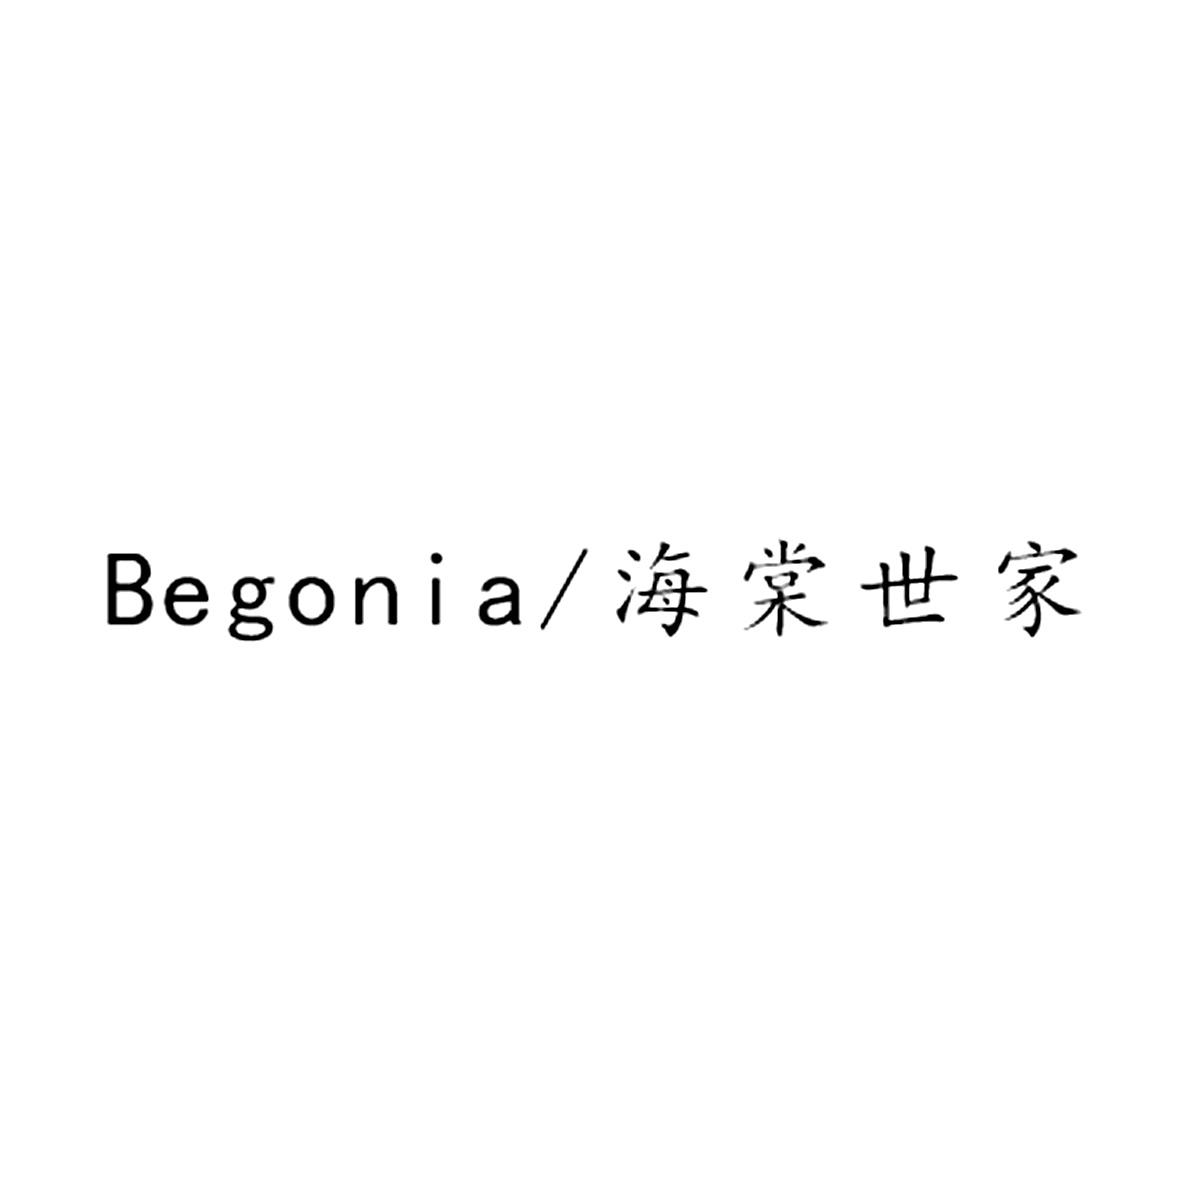 BEGONIA/海棠世家